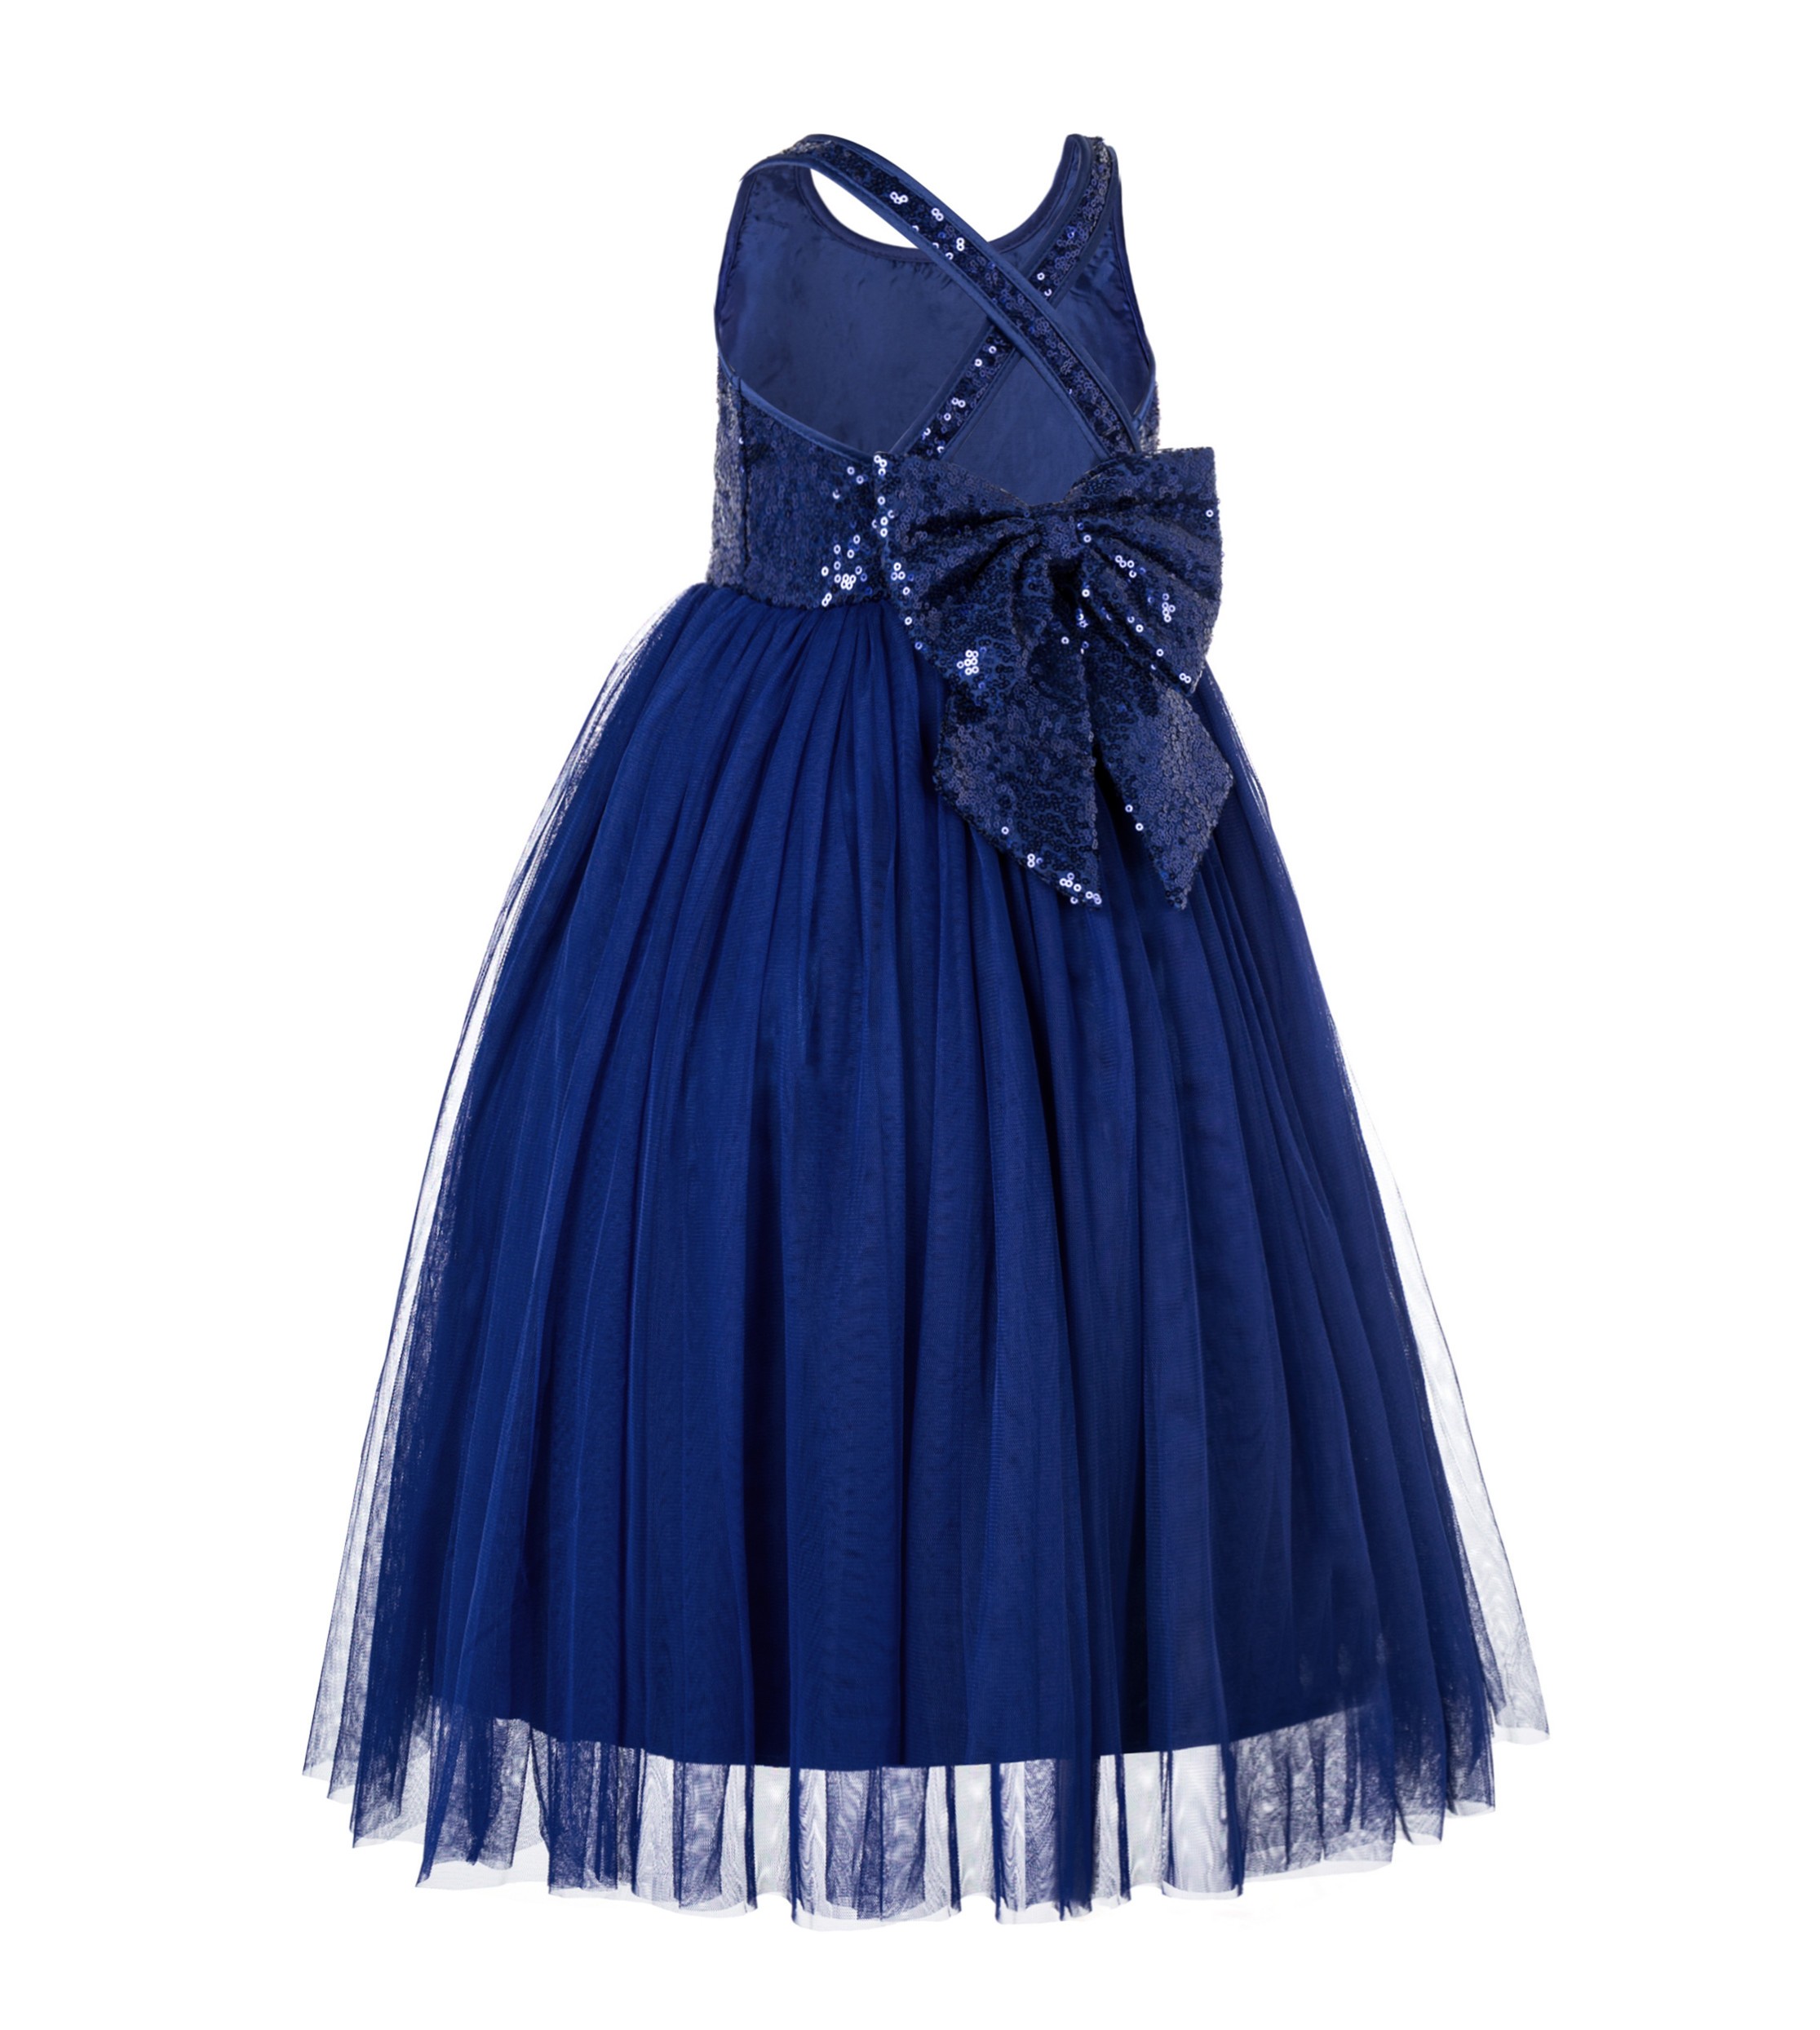 Navy Blue Crossed Straps A-Line Flower Girl Dress 177